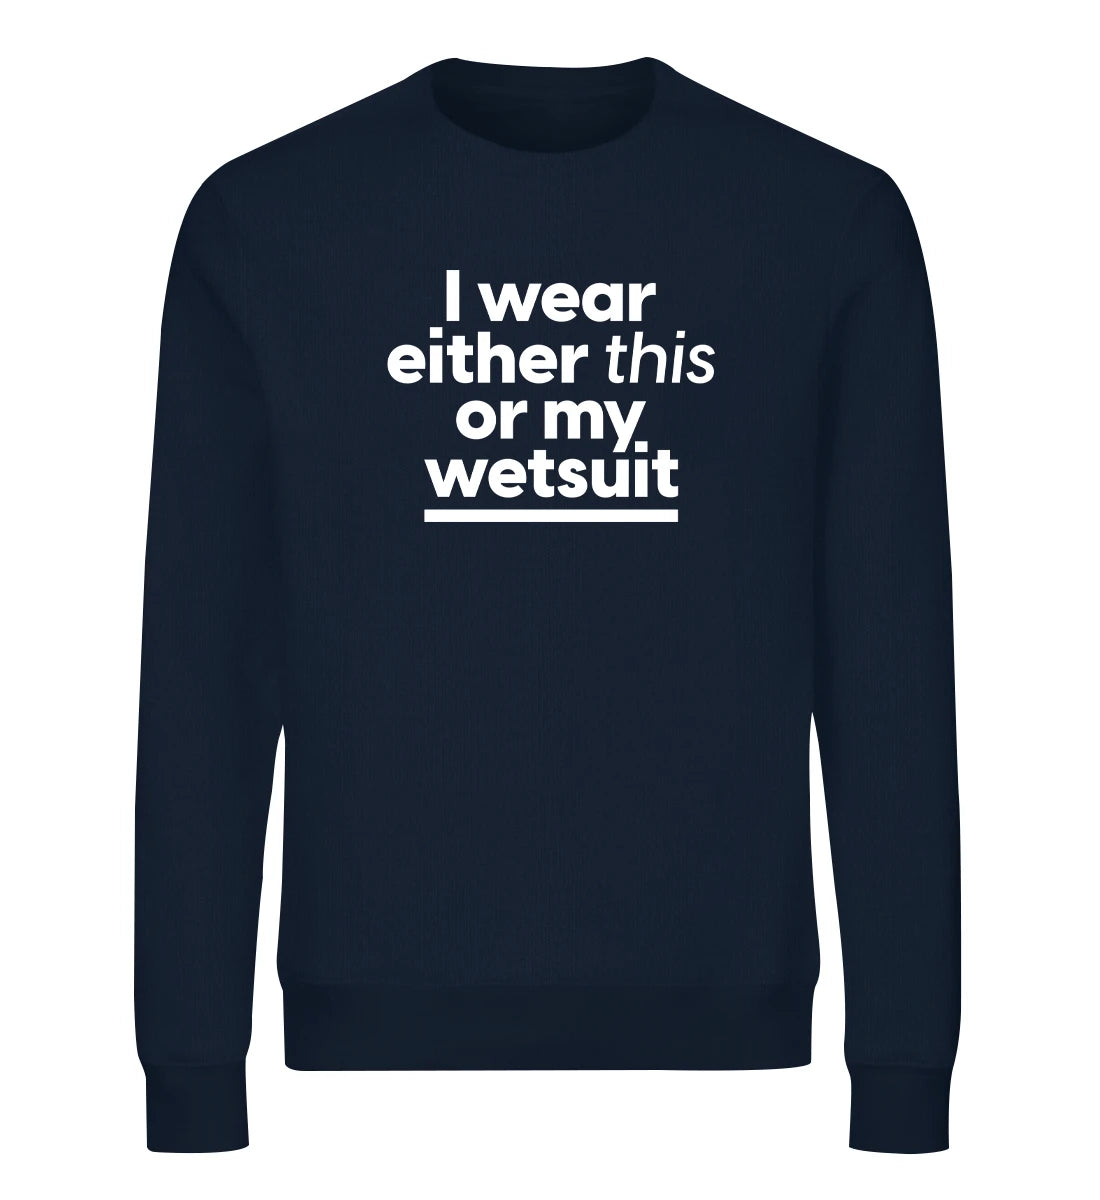 Wetsuit - Bio Sweater